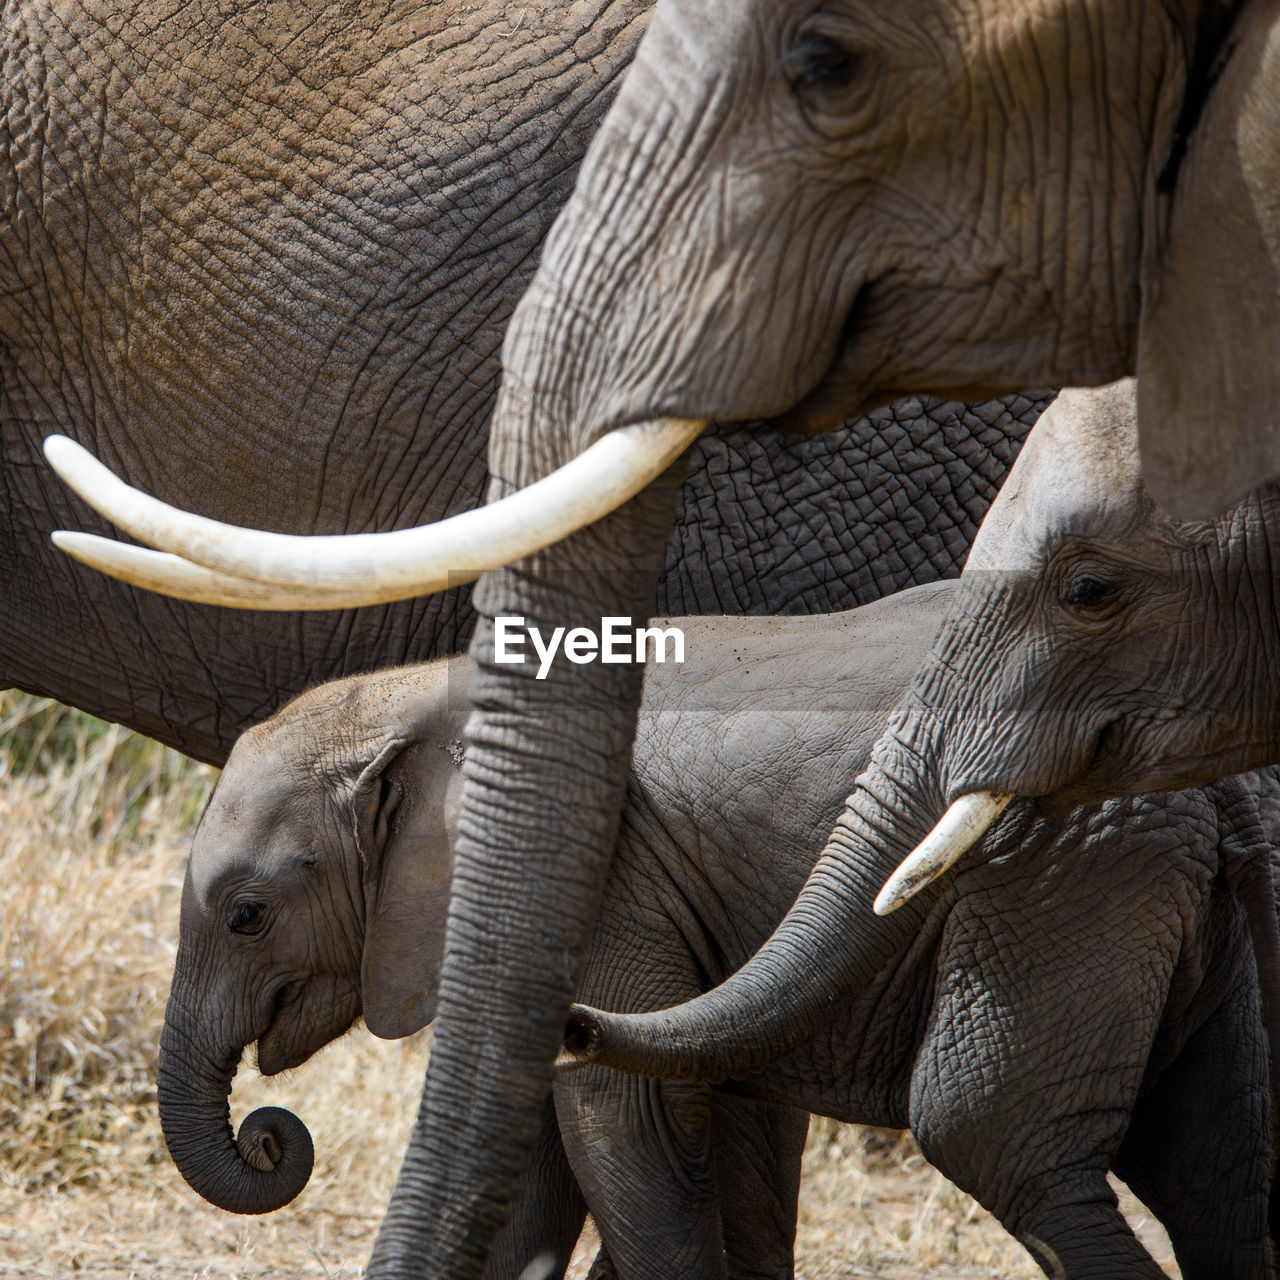 Elephant family on field